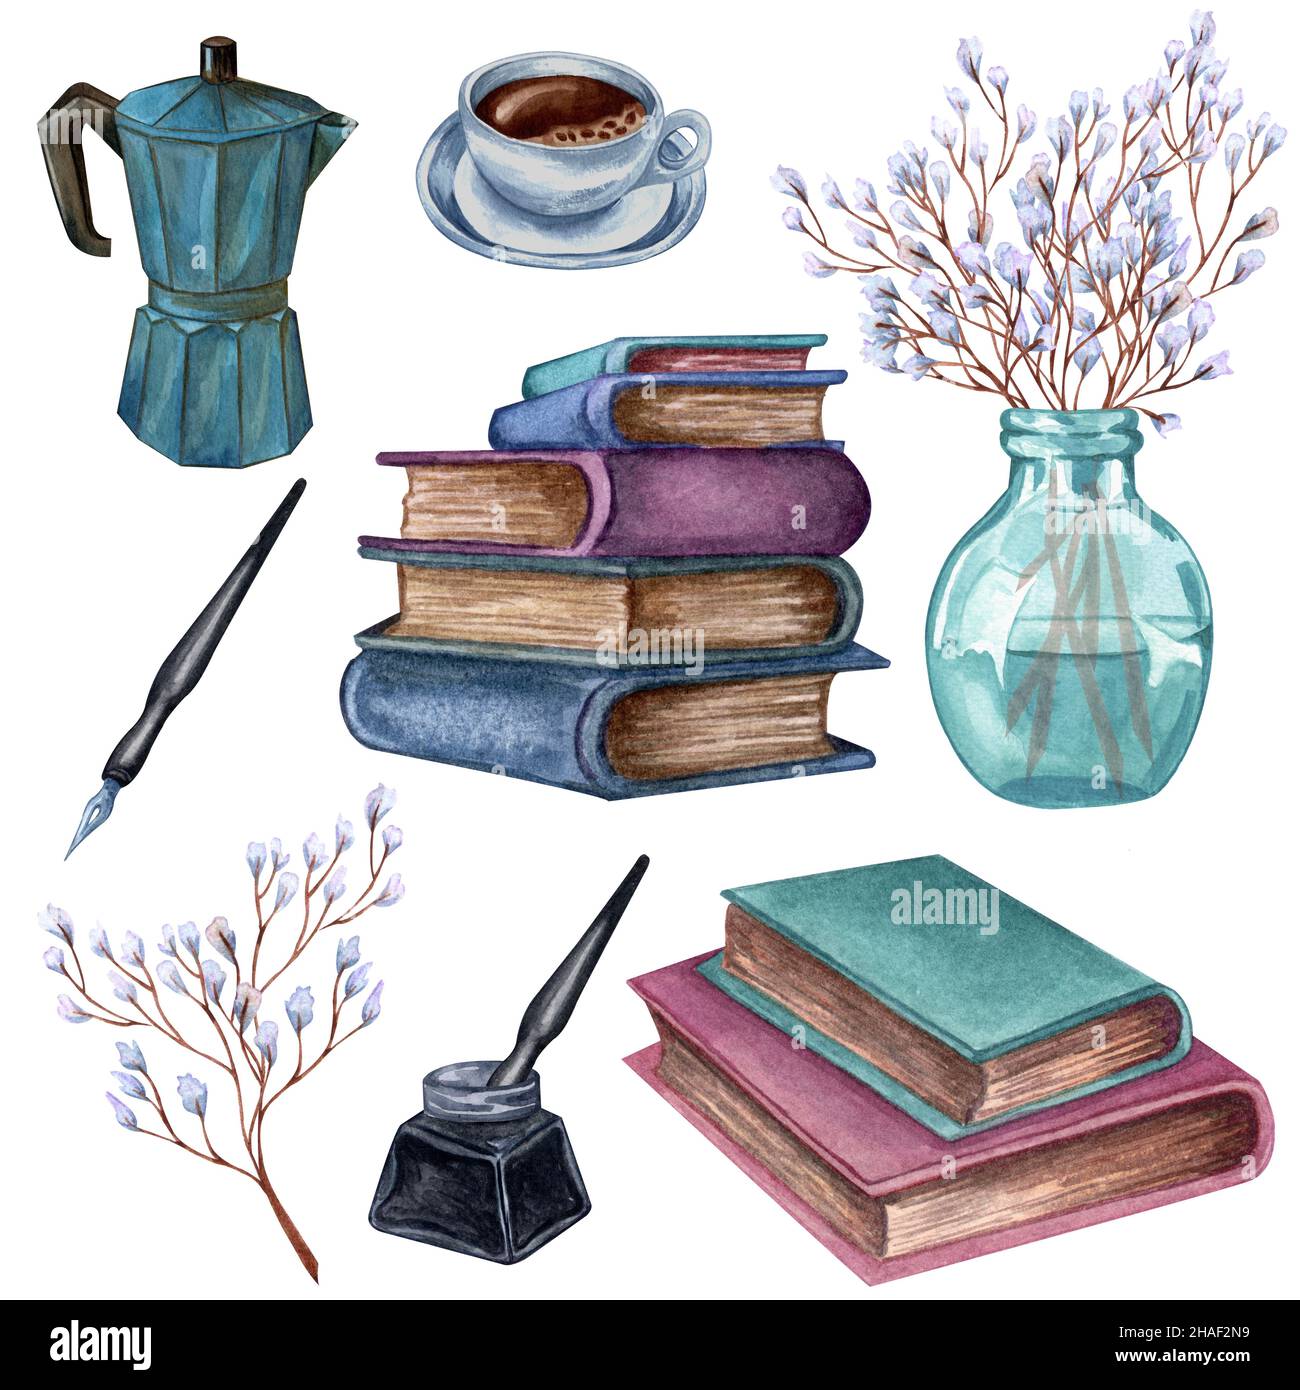 https://c8.alamy.com/comp/2HAF2N9/hand-drawn-watercolor-illustration-a-pile-of-old-color-books-ink-bottle-ink-pen-floral-twig-in-a-vase-coffee-maker-cup-of-coffe-2HAF2N9.jpg